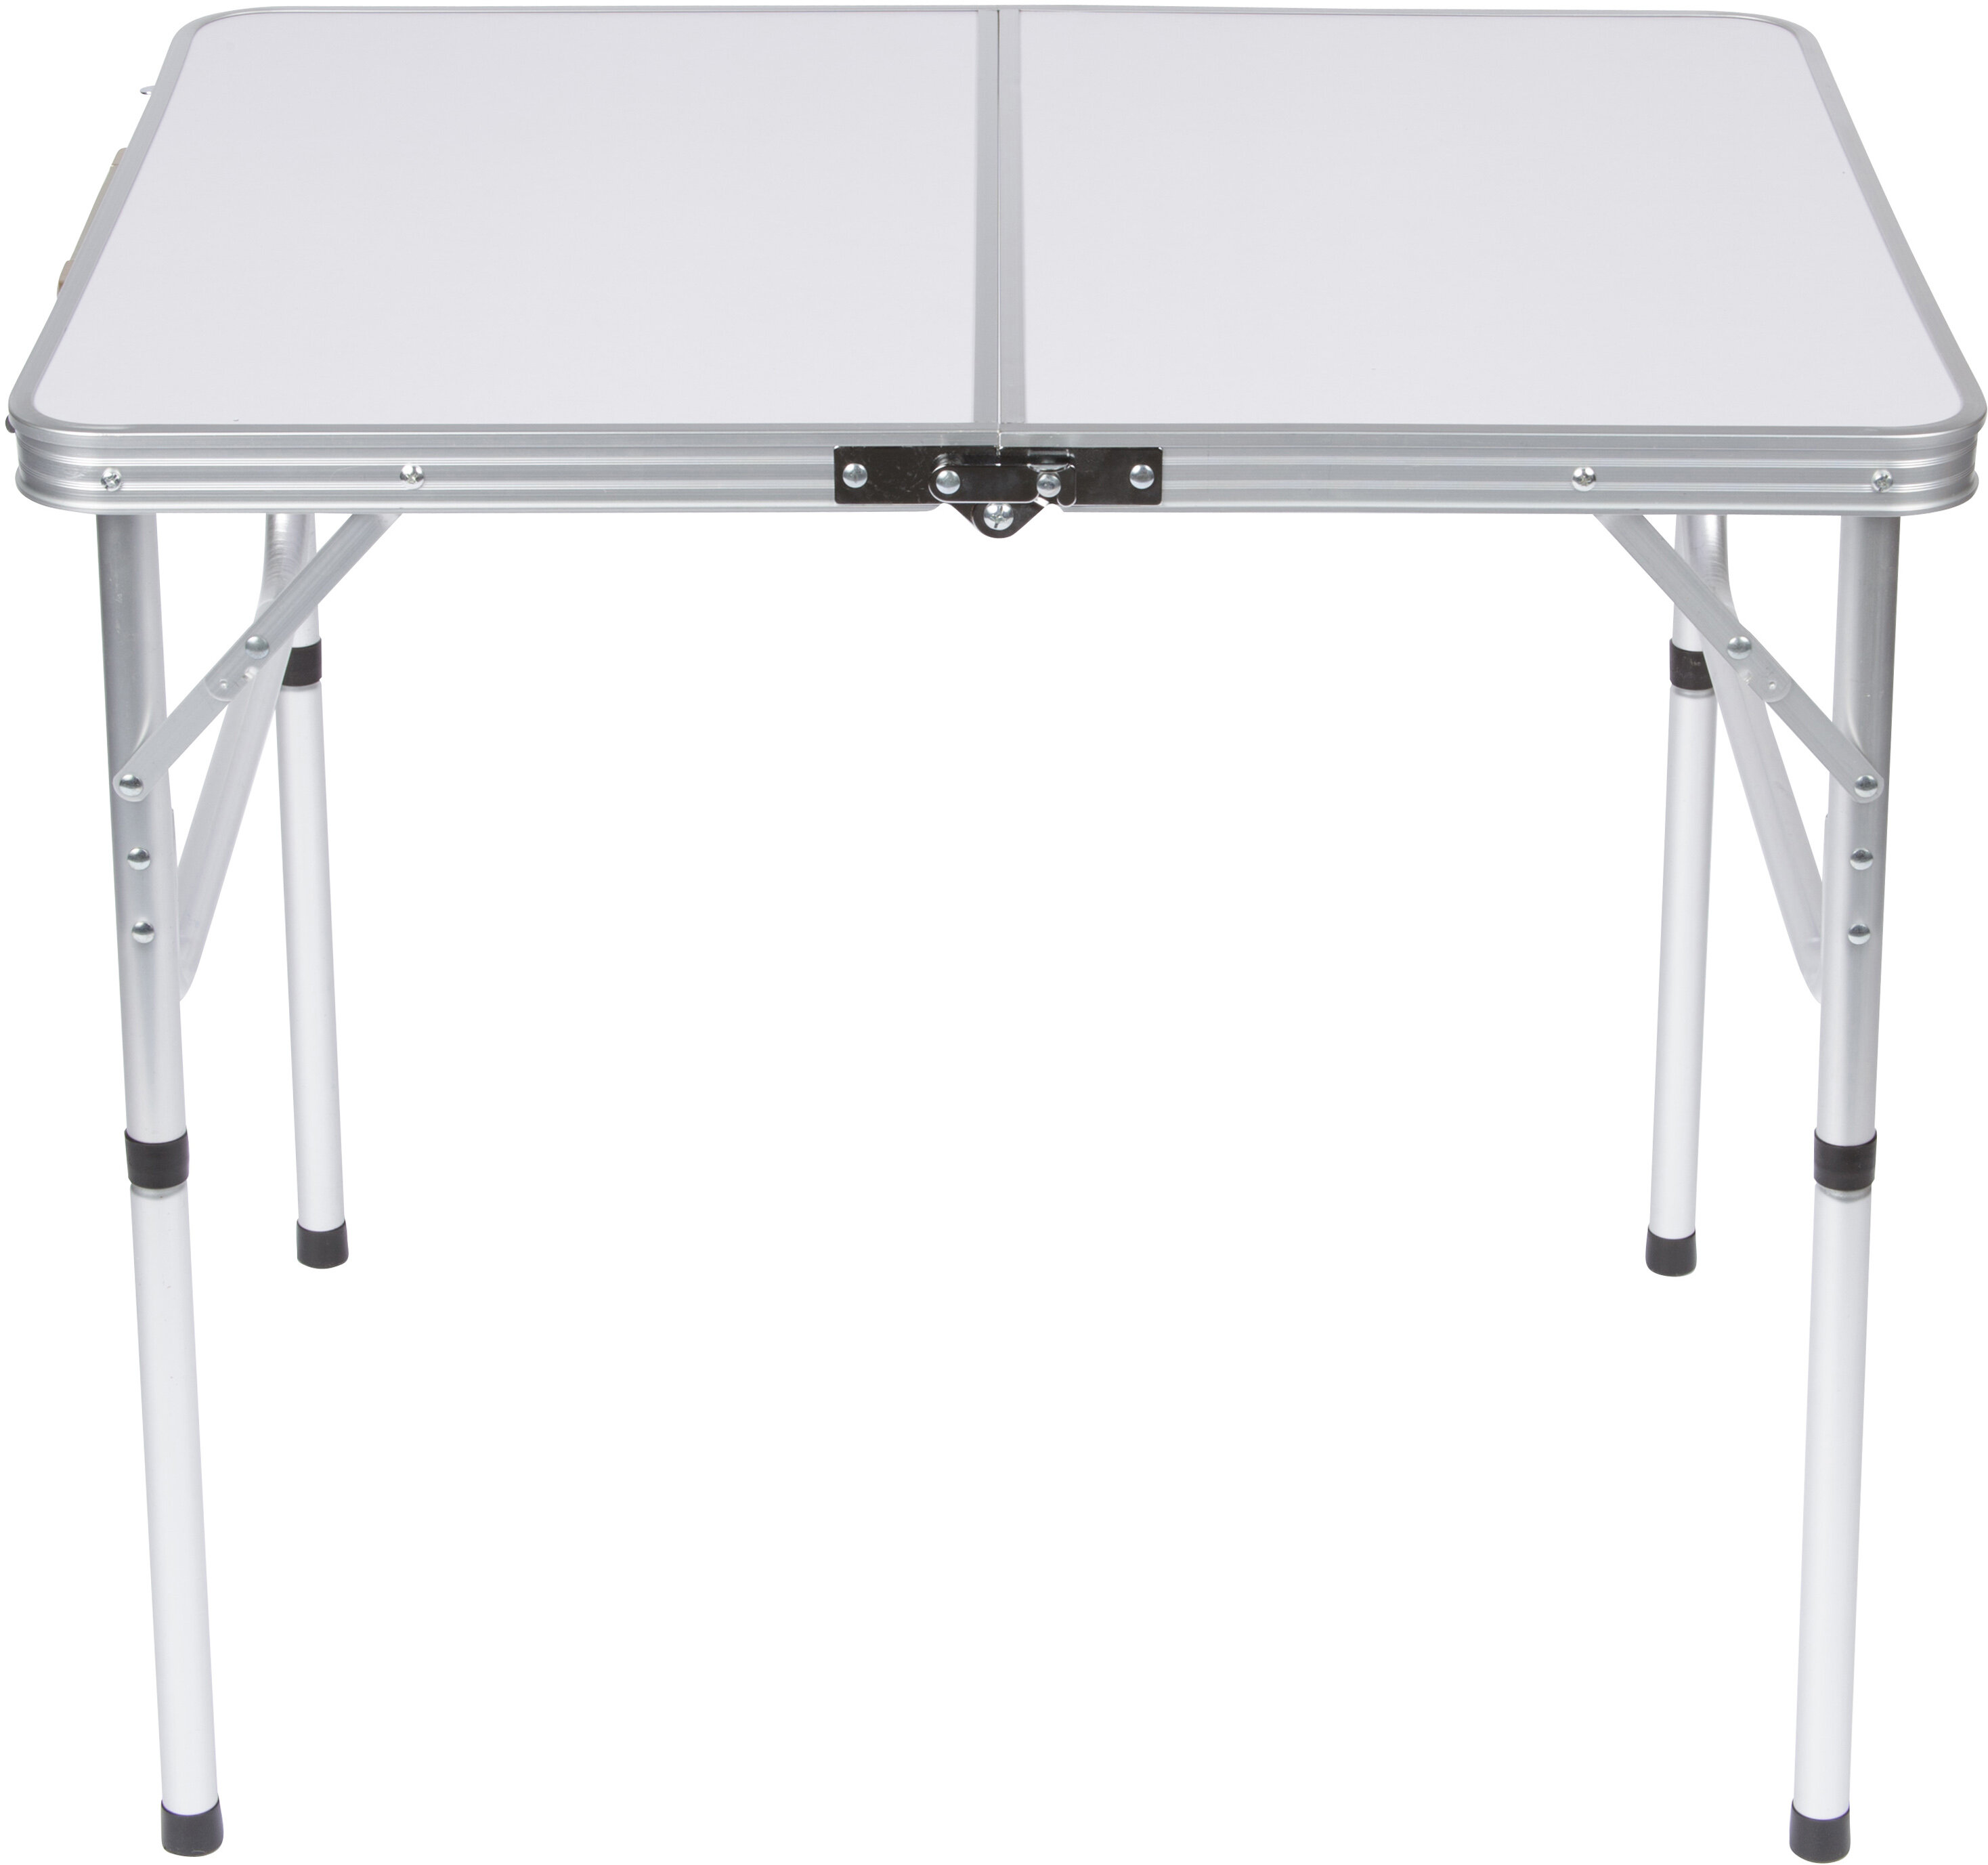 Trademark Innovations 31'' Rectangular Adjustable Folding Table